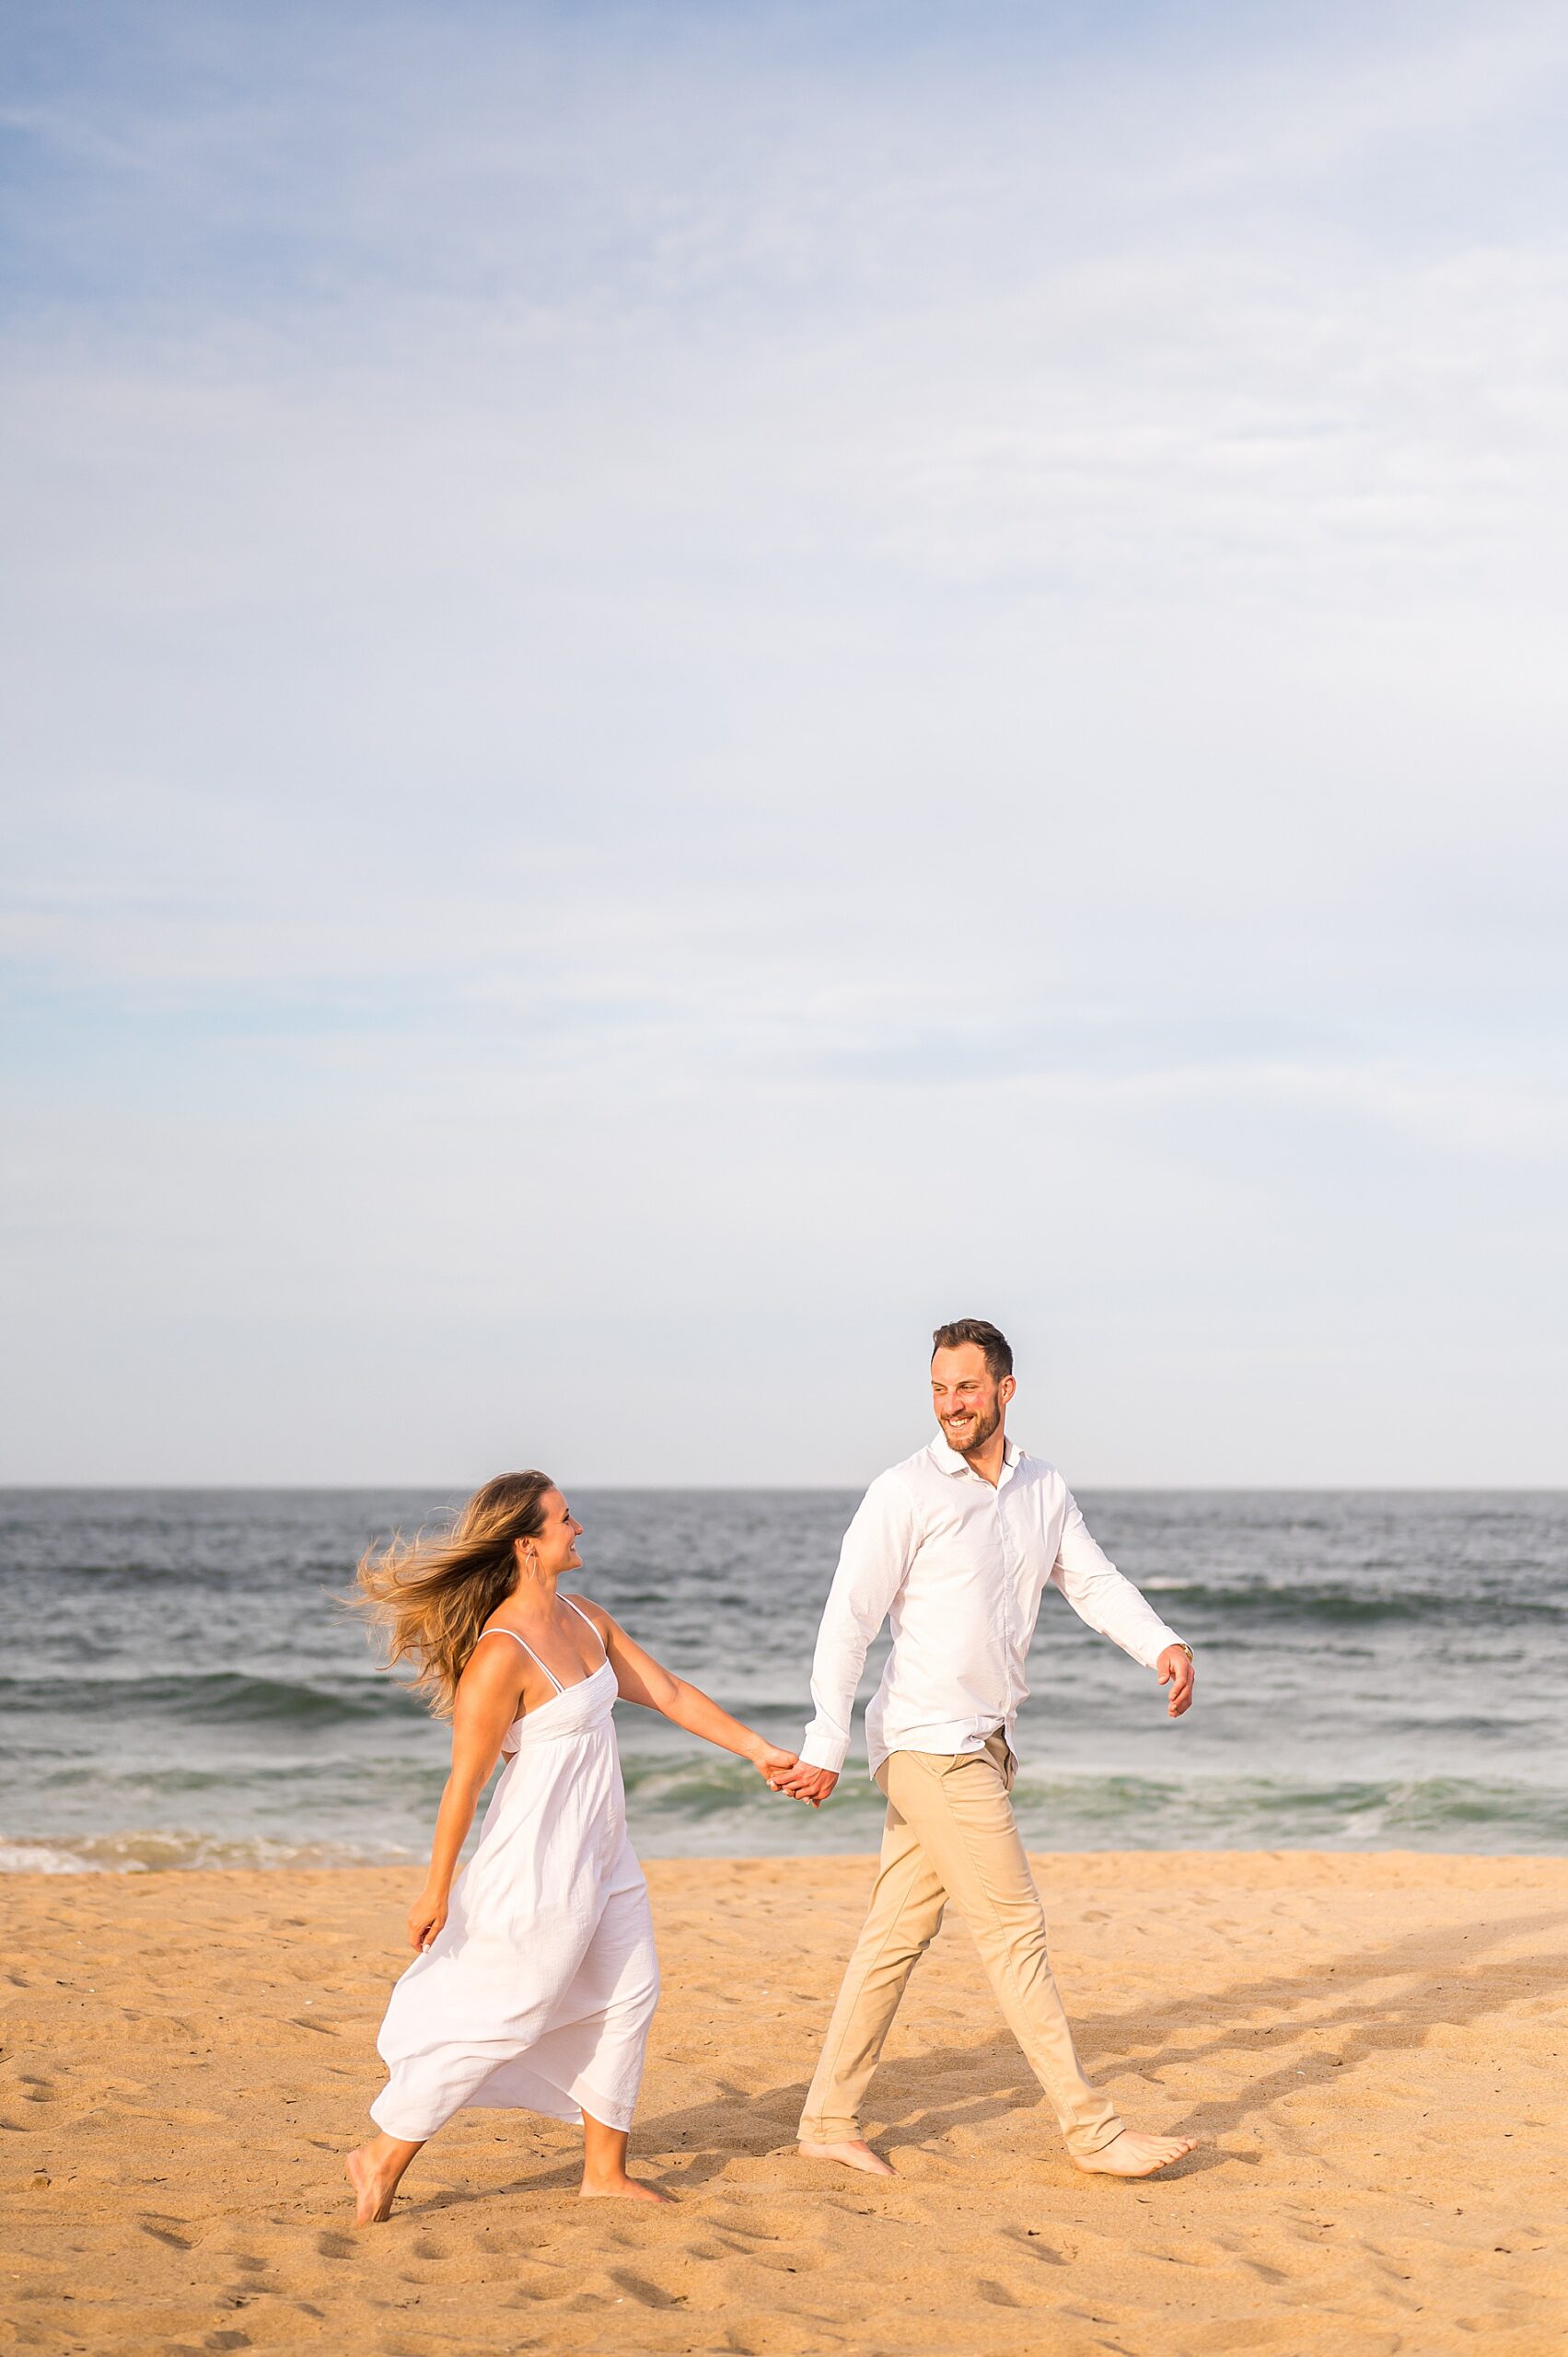 Summer Engagement Portraits on New England beach